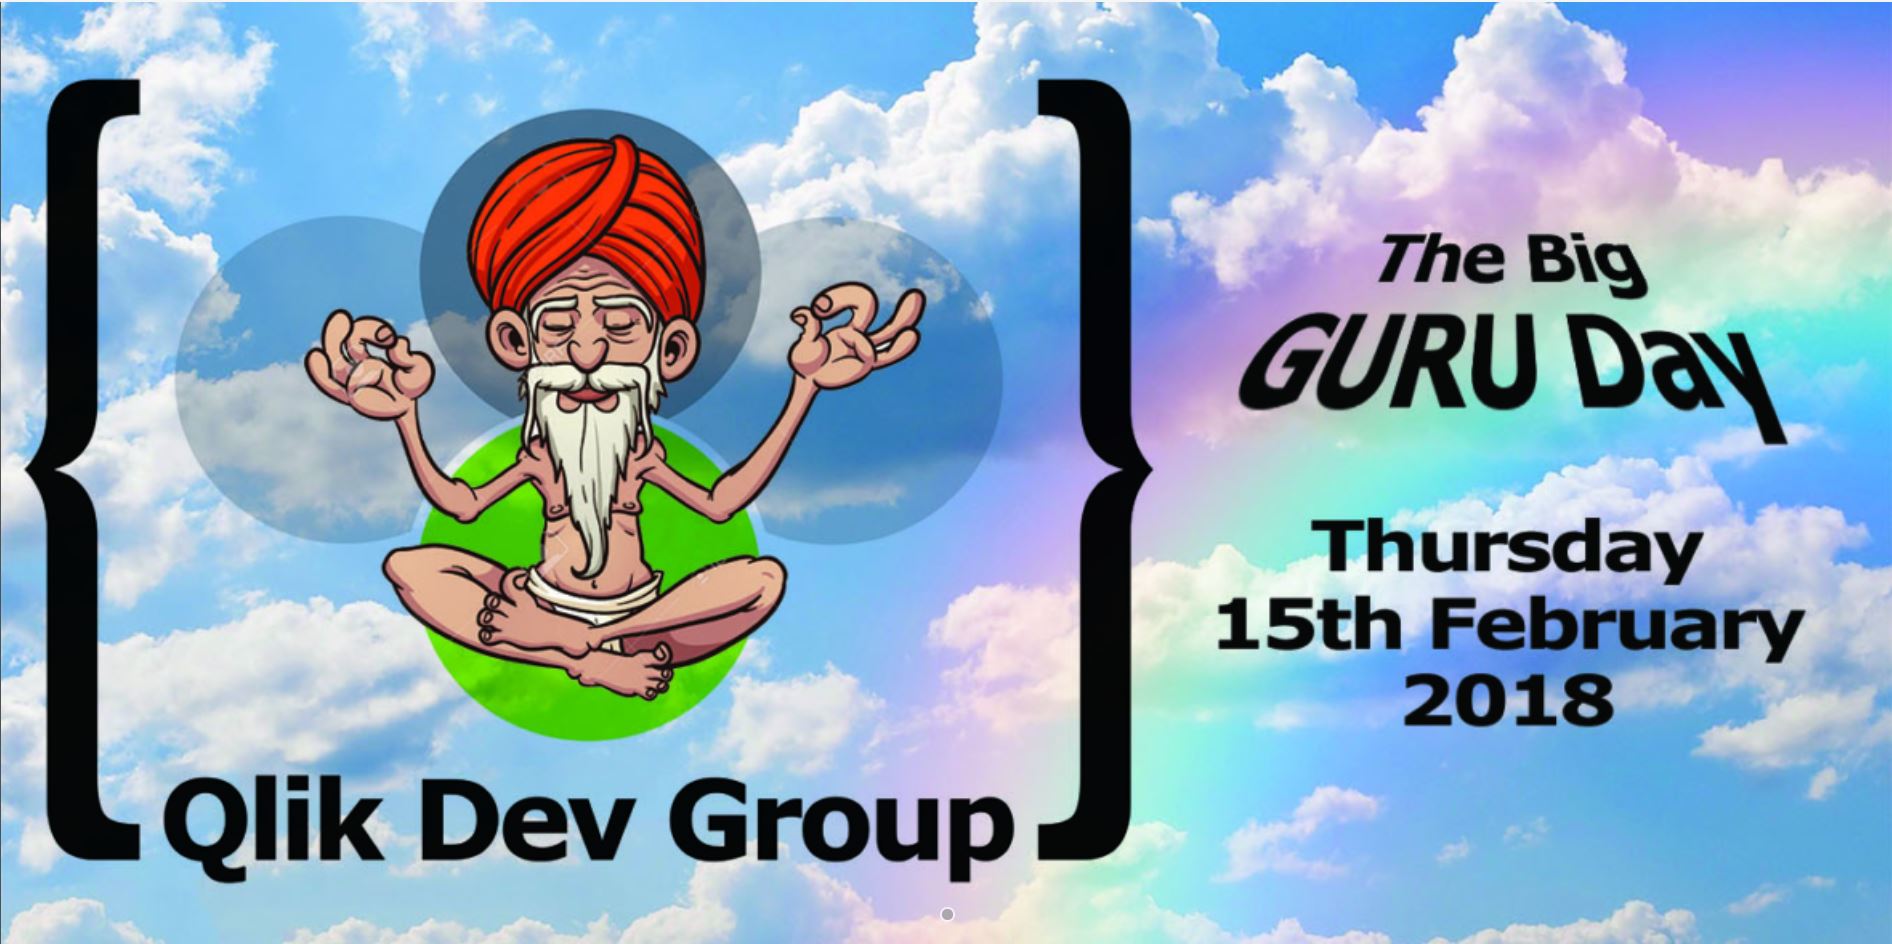 qlik dev group guru day